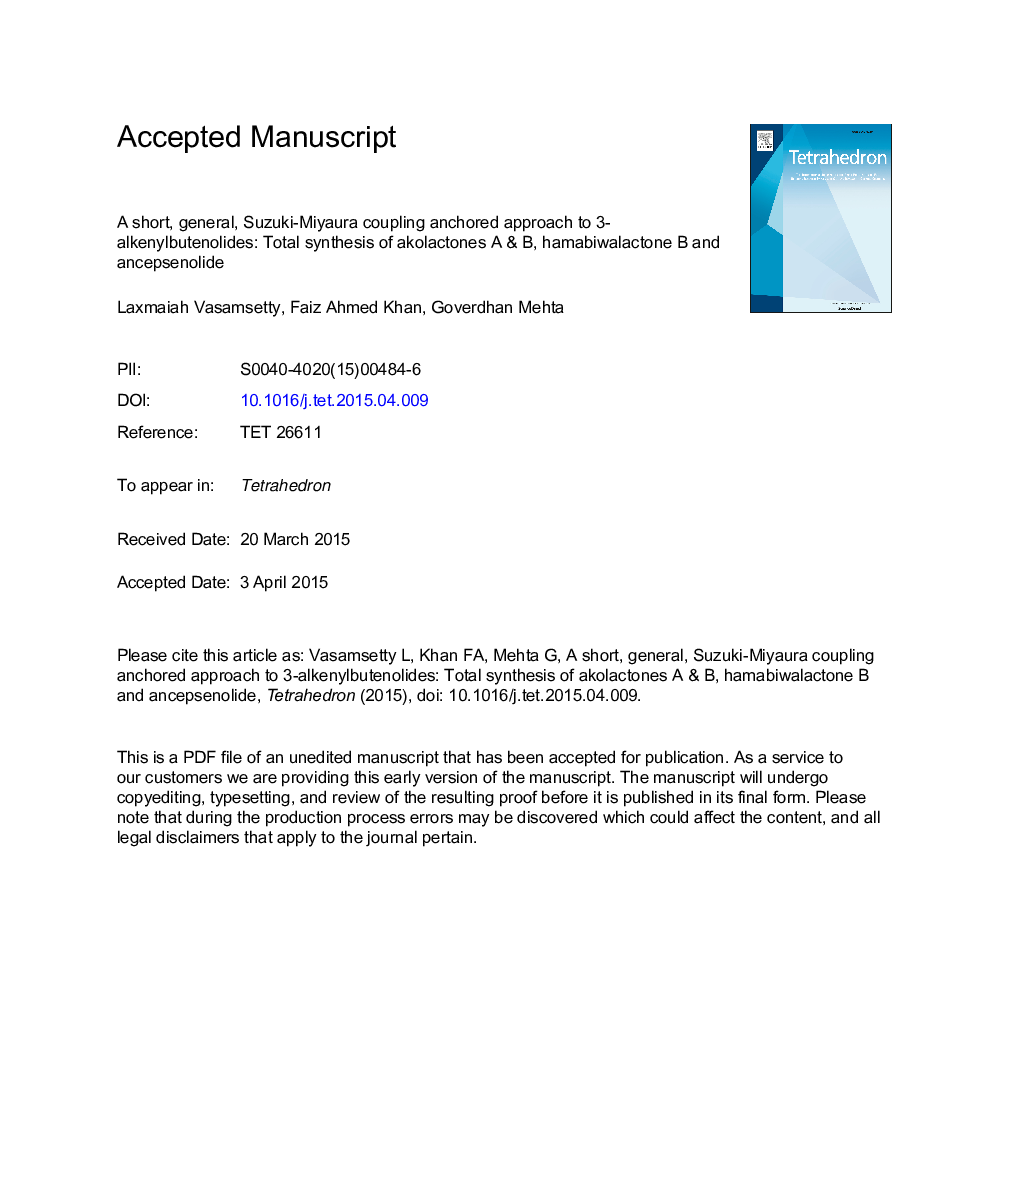 A short, general, Suzuki-Miyaura coupling anchored approach to 3-alkenylbutenolides: total synthesis of akolactones A & B, hamabiwalactone B and ancepsenolide